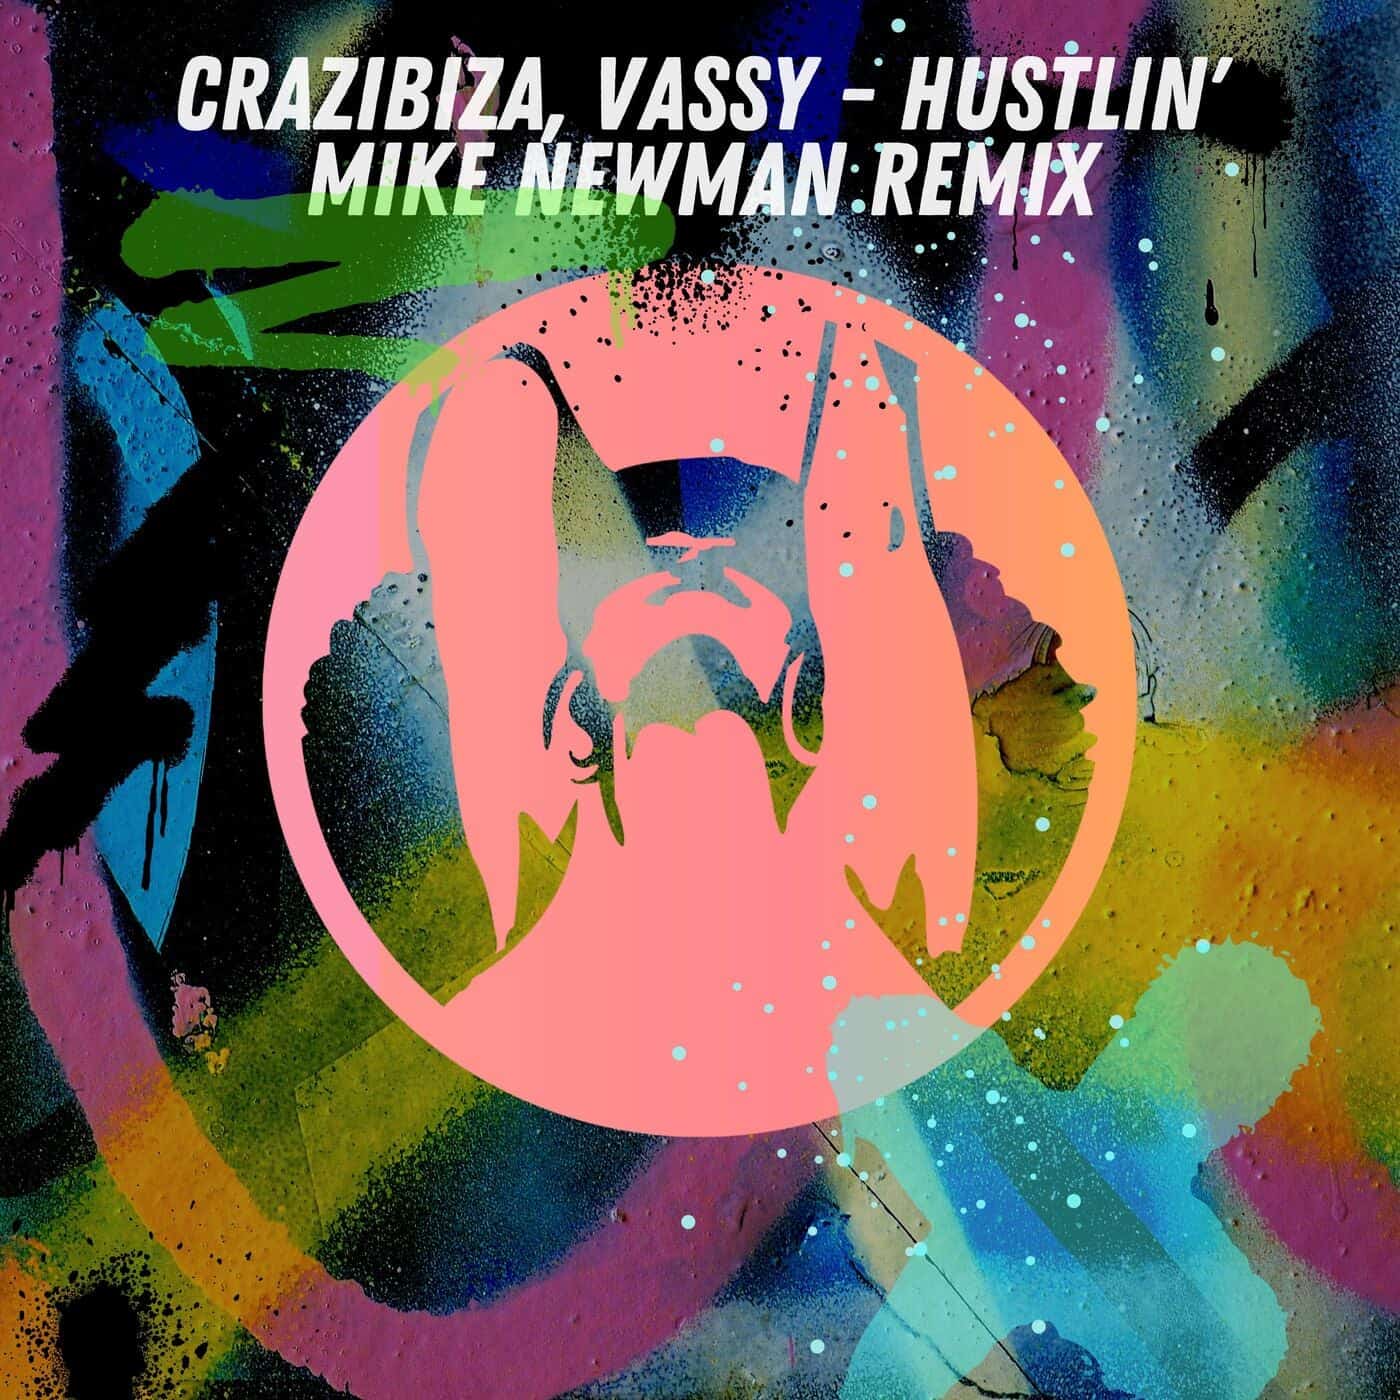 Download Crazibiza, VASSY - Crazibiza, Vassy - Hustlin' ( Mike Newman Remix ) on Electrobuzz